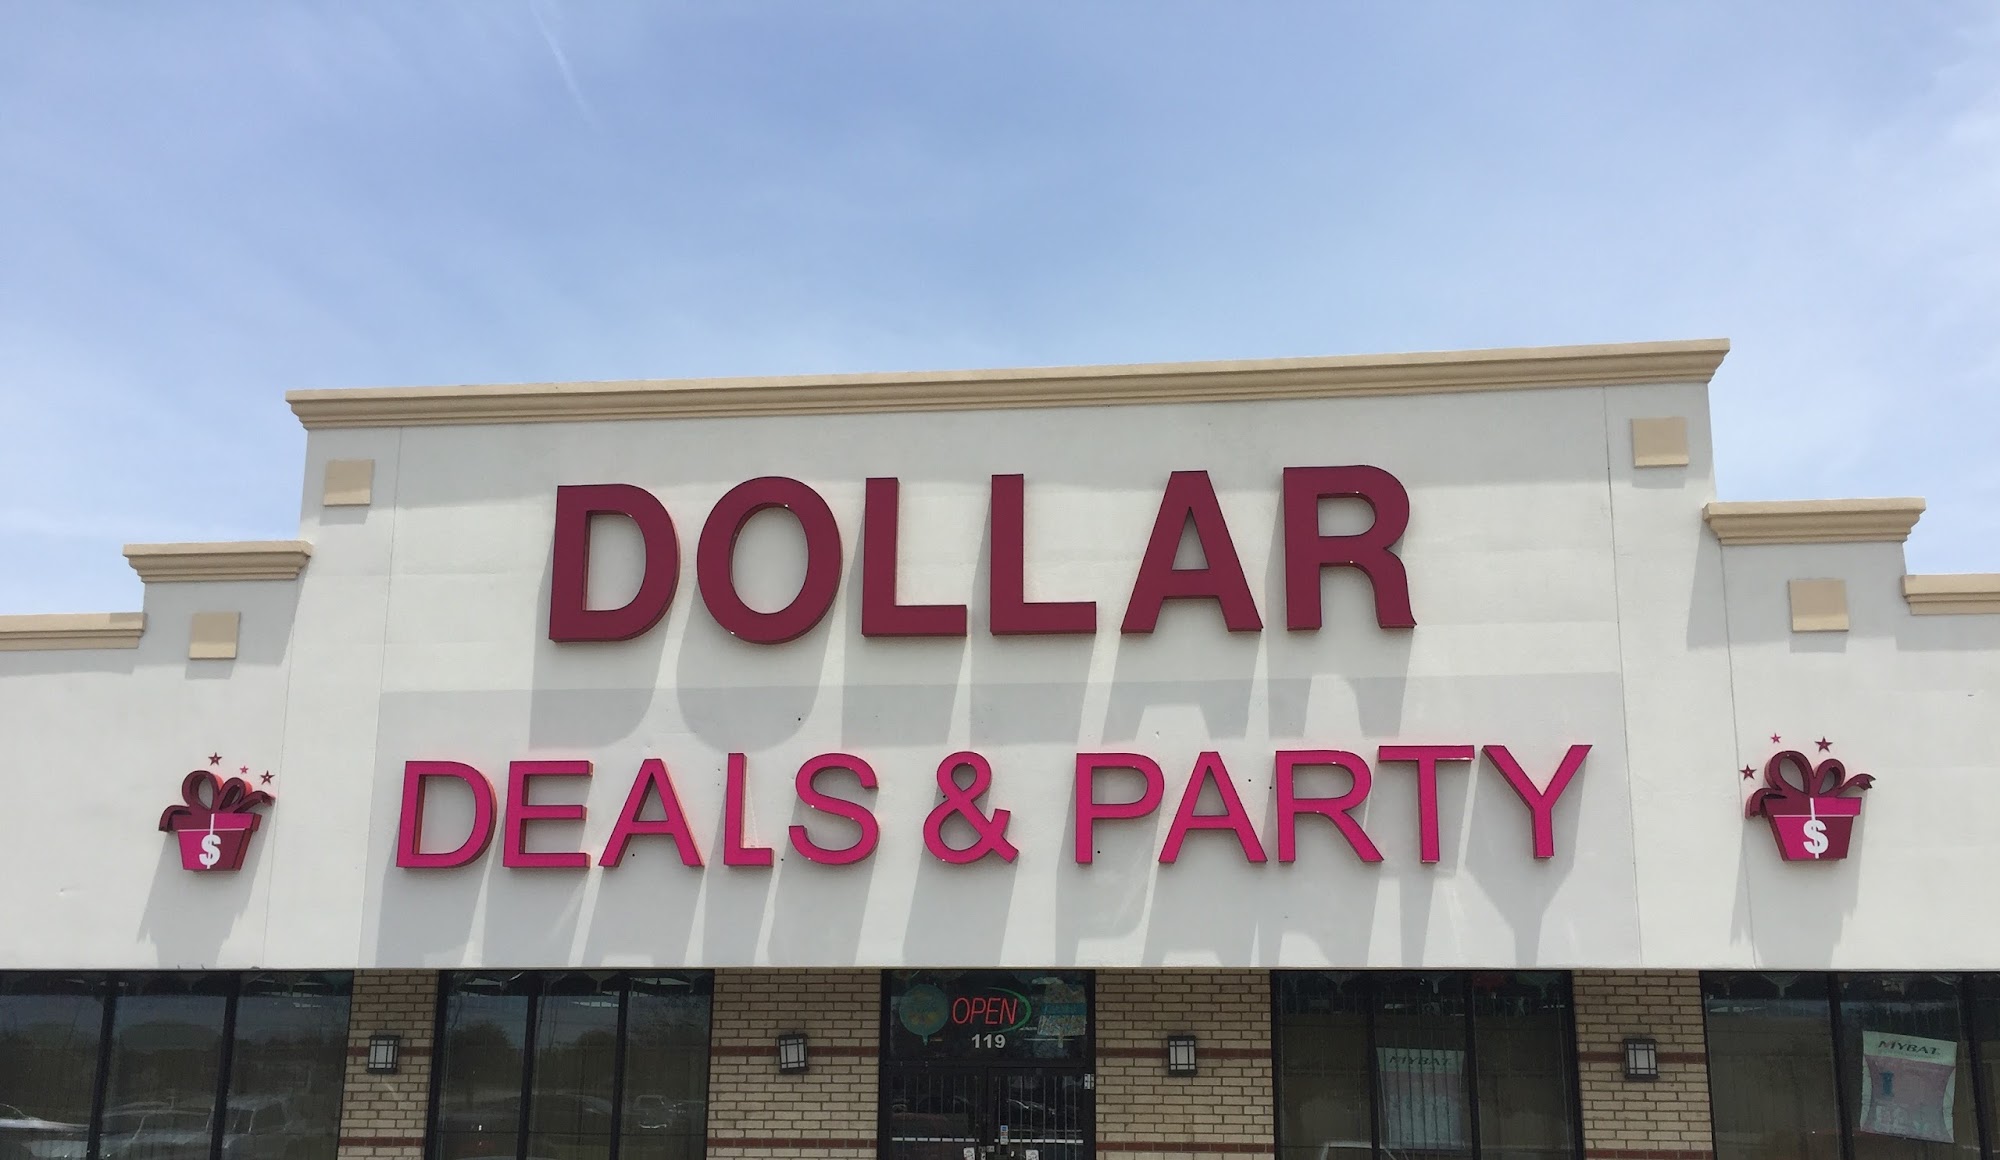 Dollar Deals & Party Supplies Store